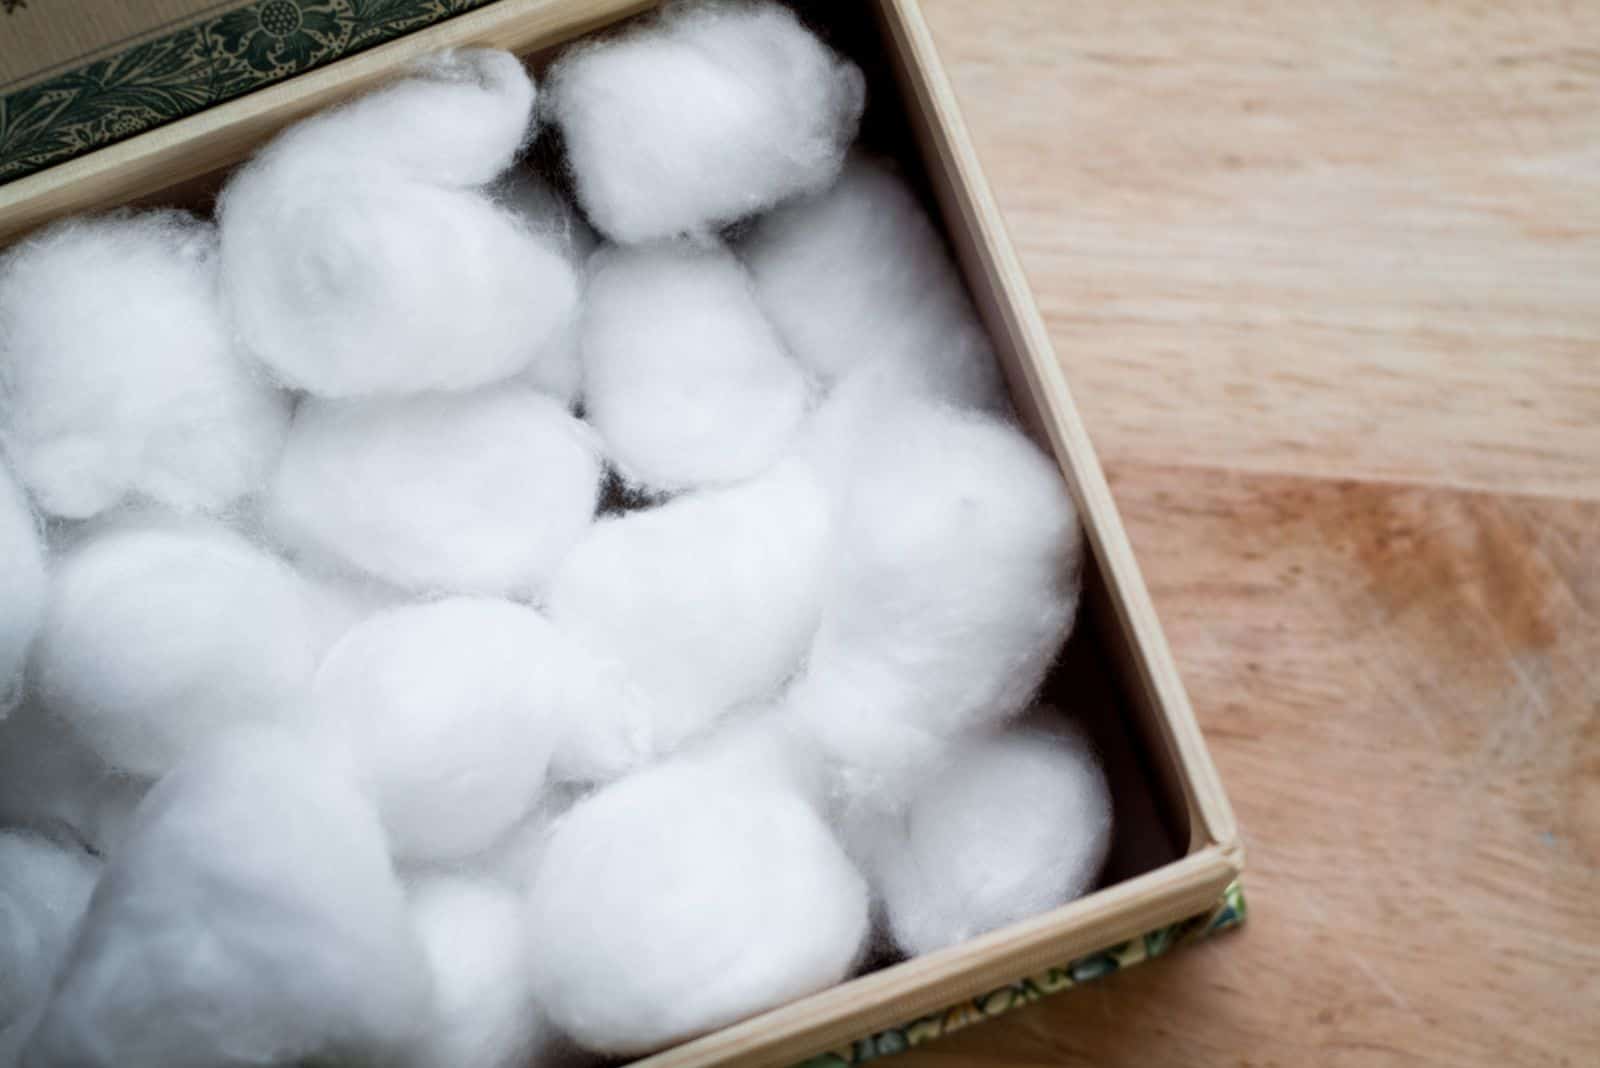  cardboard box full of white cotton balls